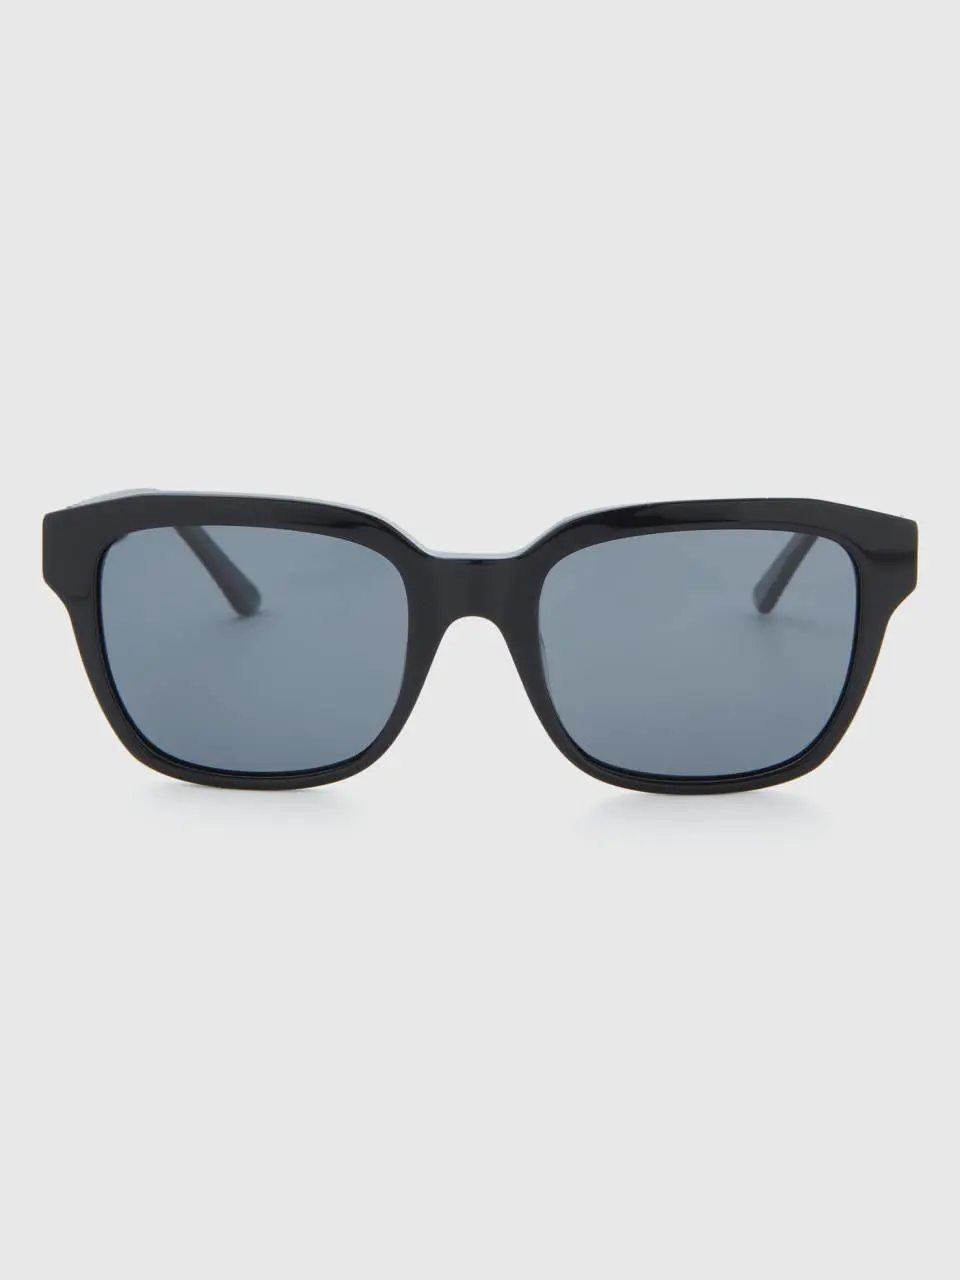 Benetton black sunglasses with logo. 1